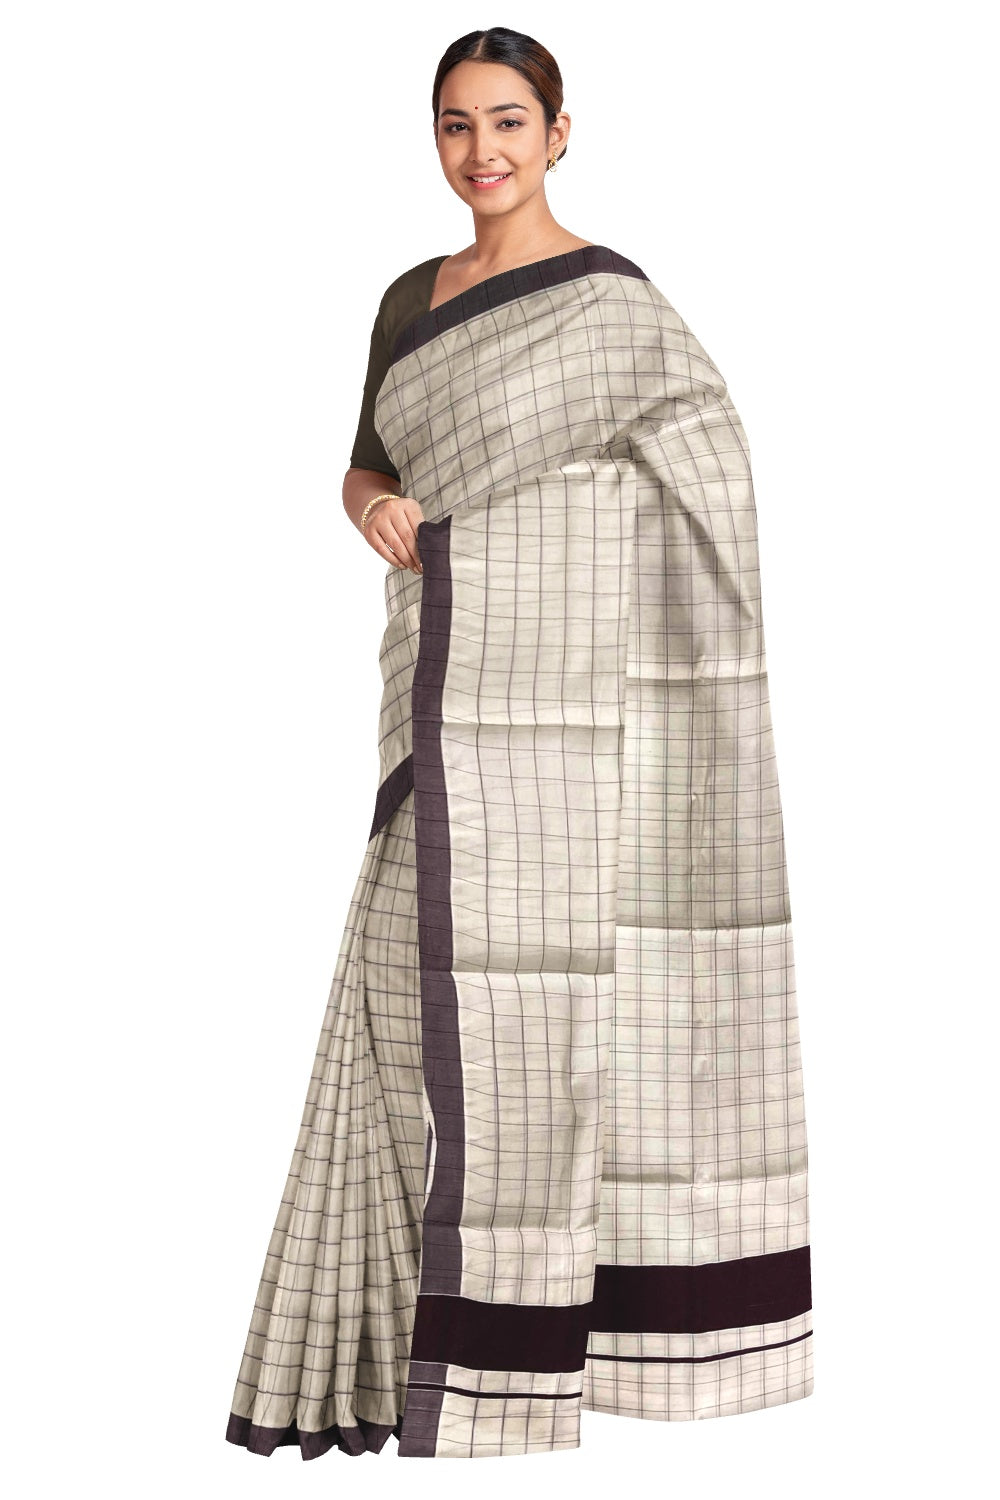 Kerala Pure Cotton Brown Woven Check Saree with 3 inch Border